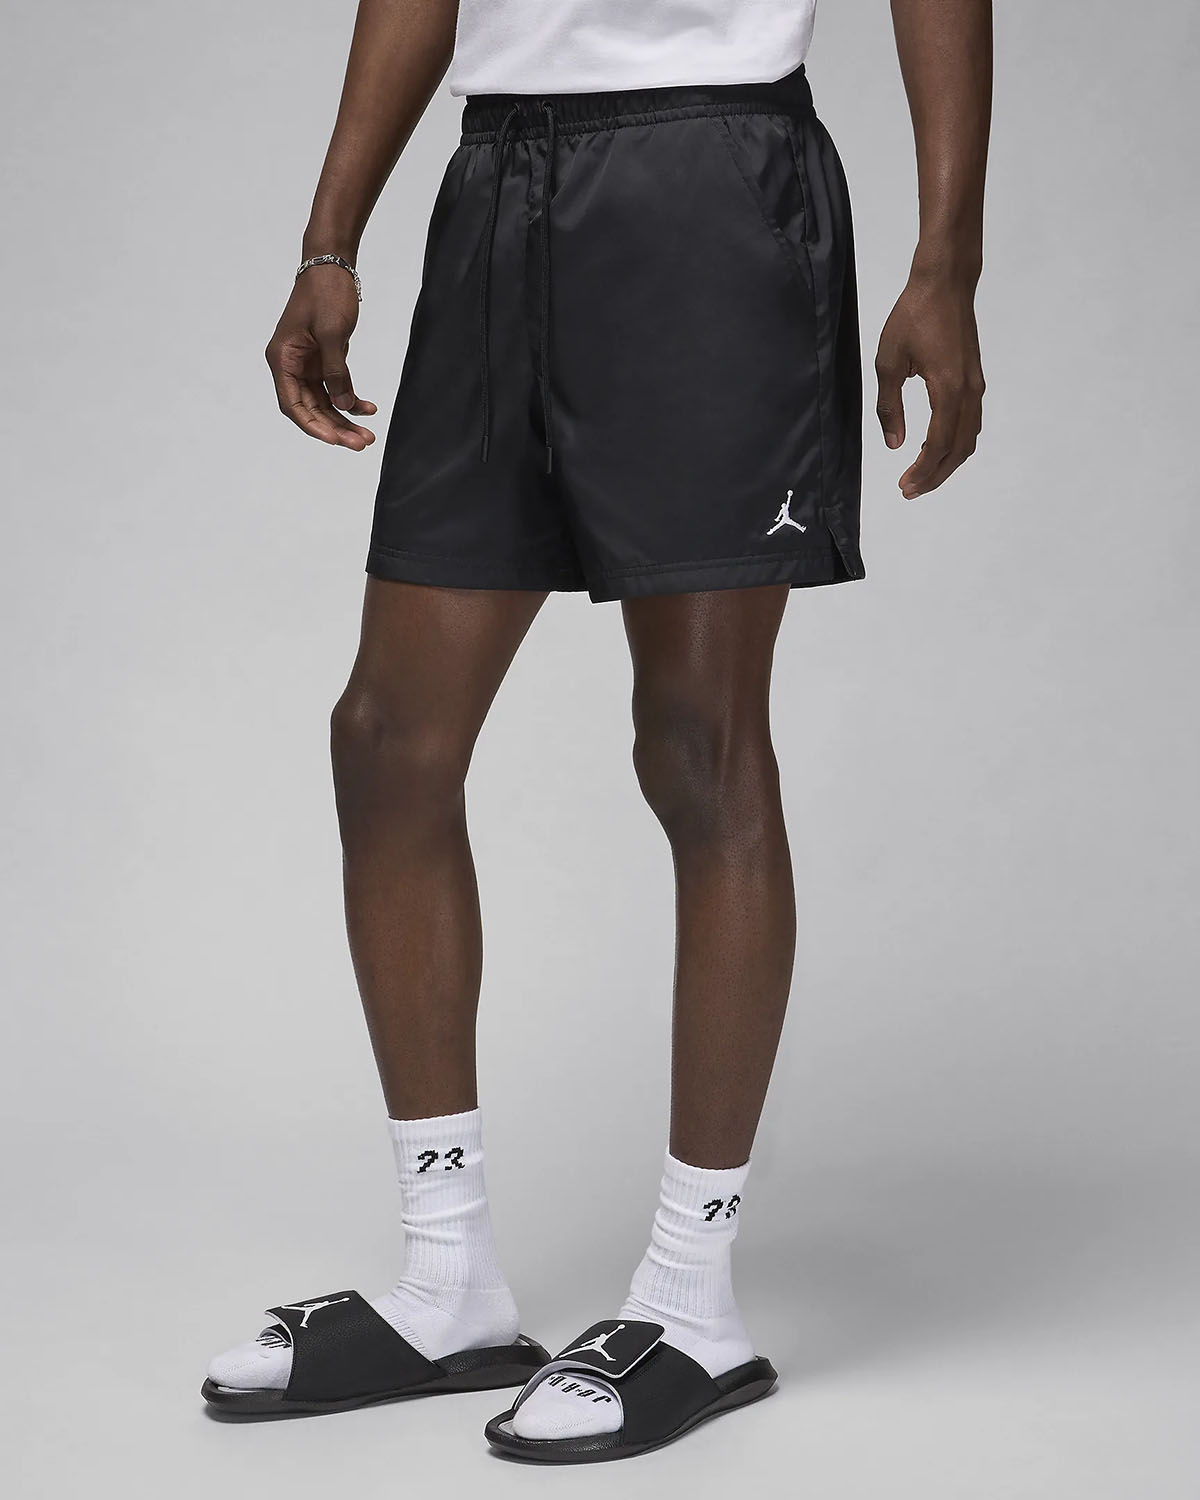 Jordan Poolside Shorts Black White 1